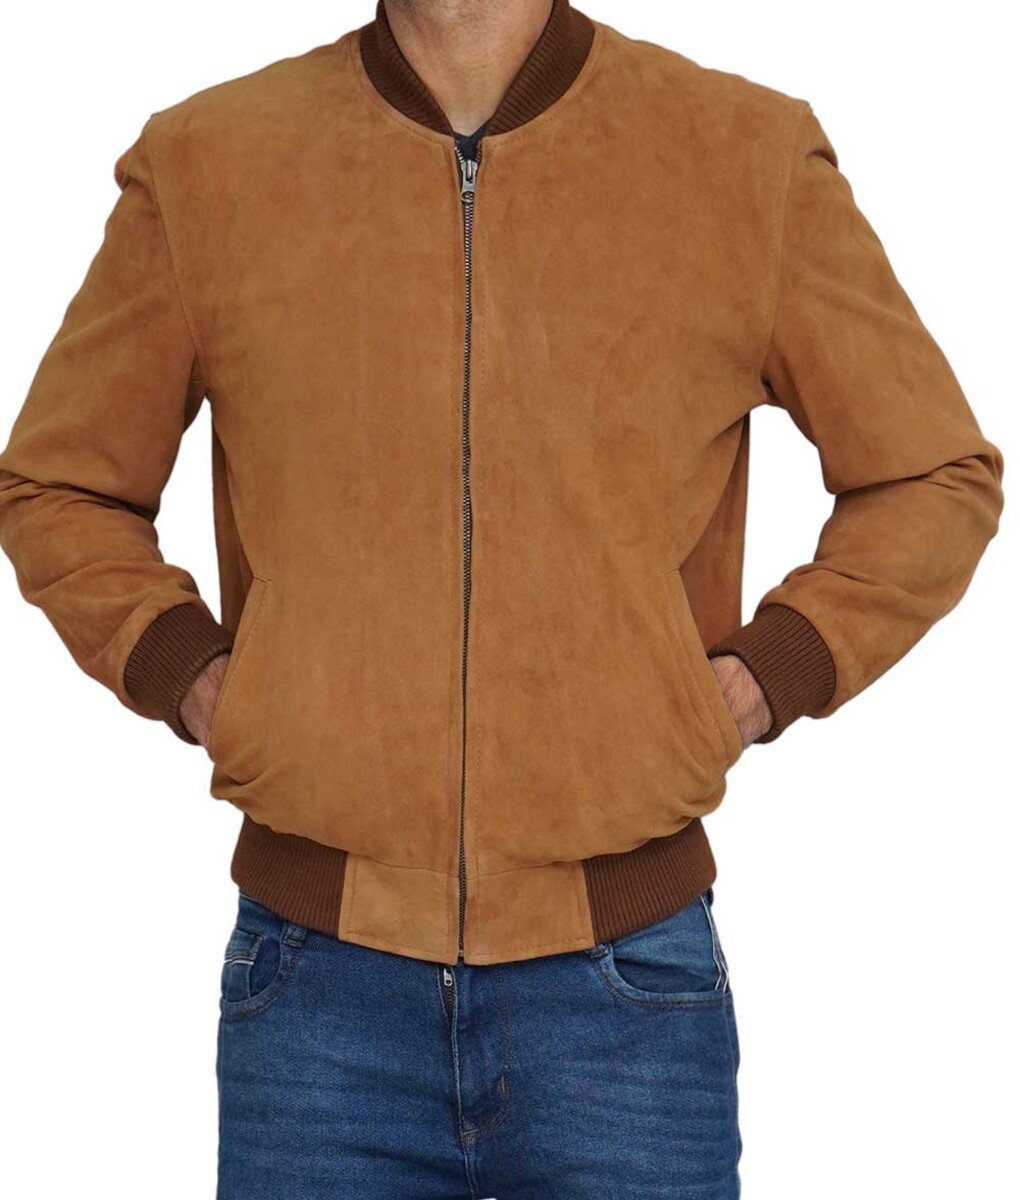 Adamsville_Camel_Brown_Leather_jacket